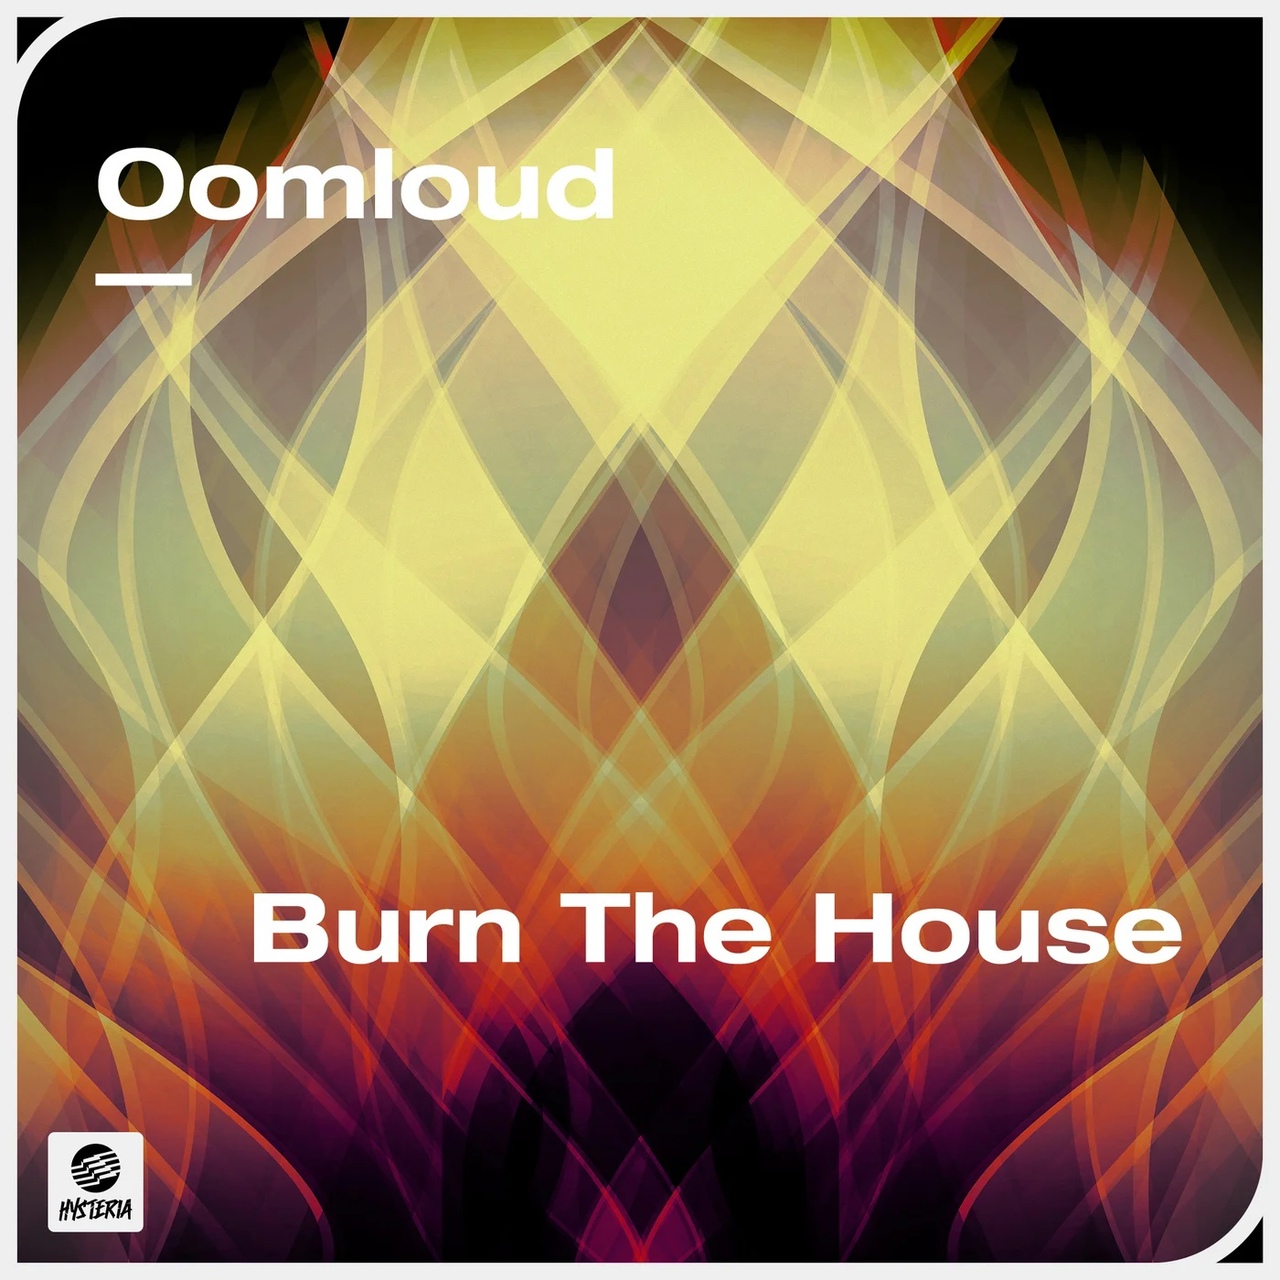 Oomloud Burn The House cover artwork